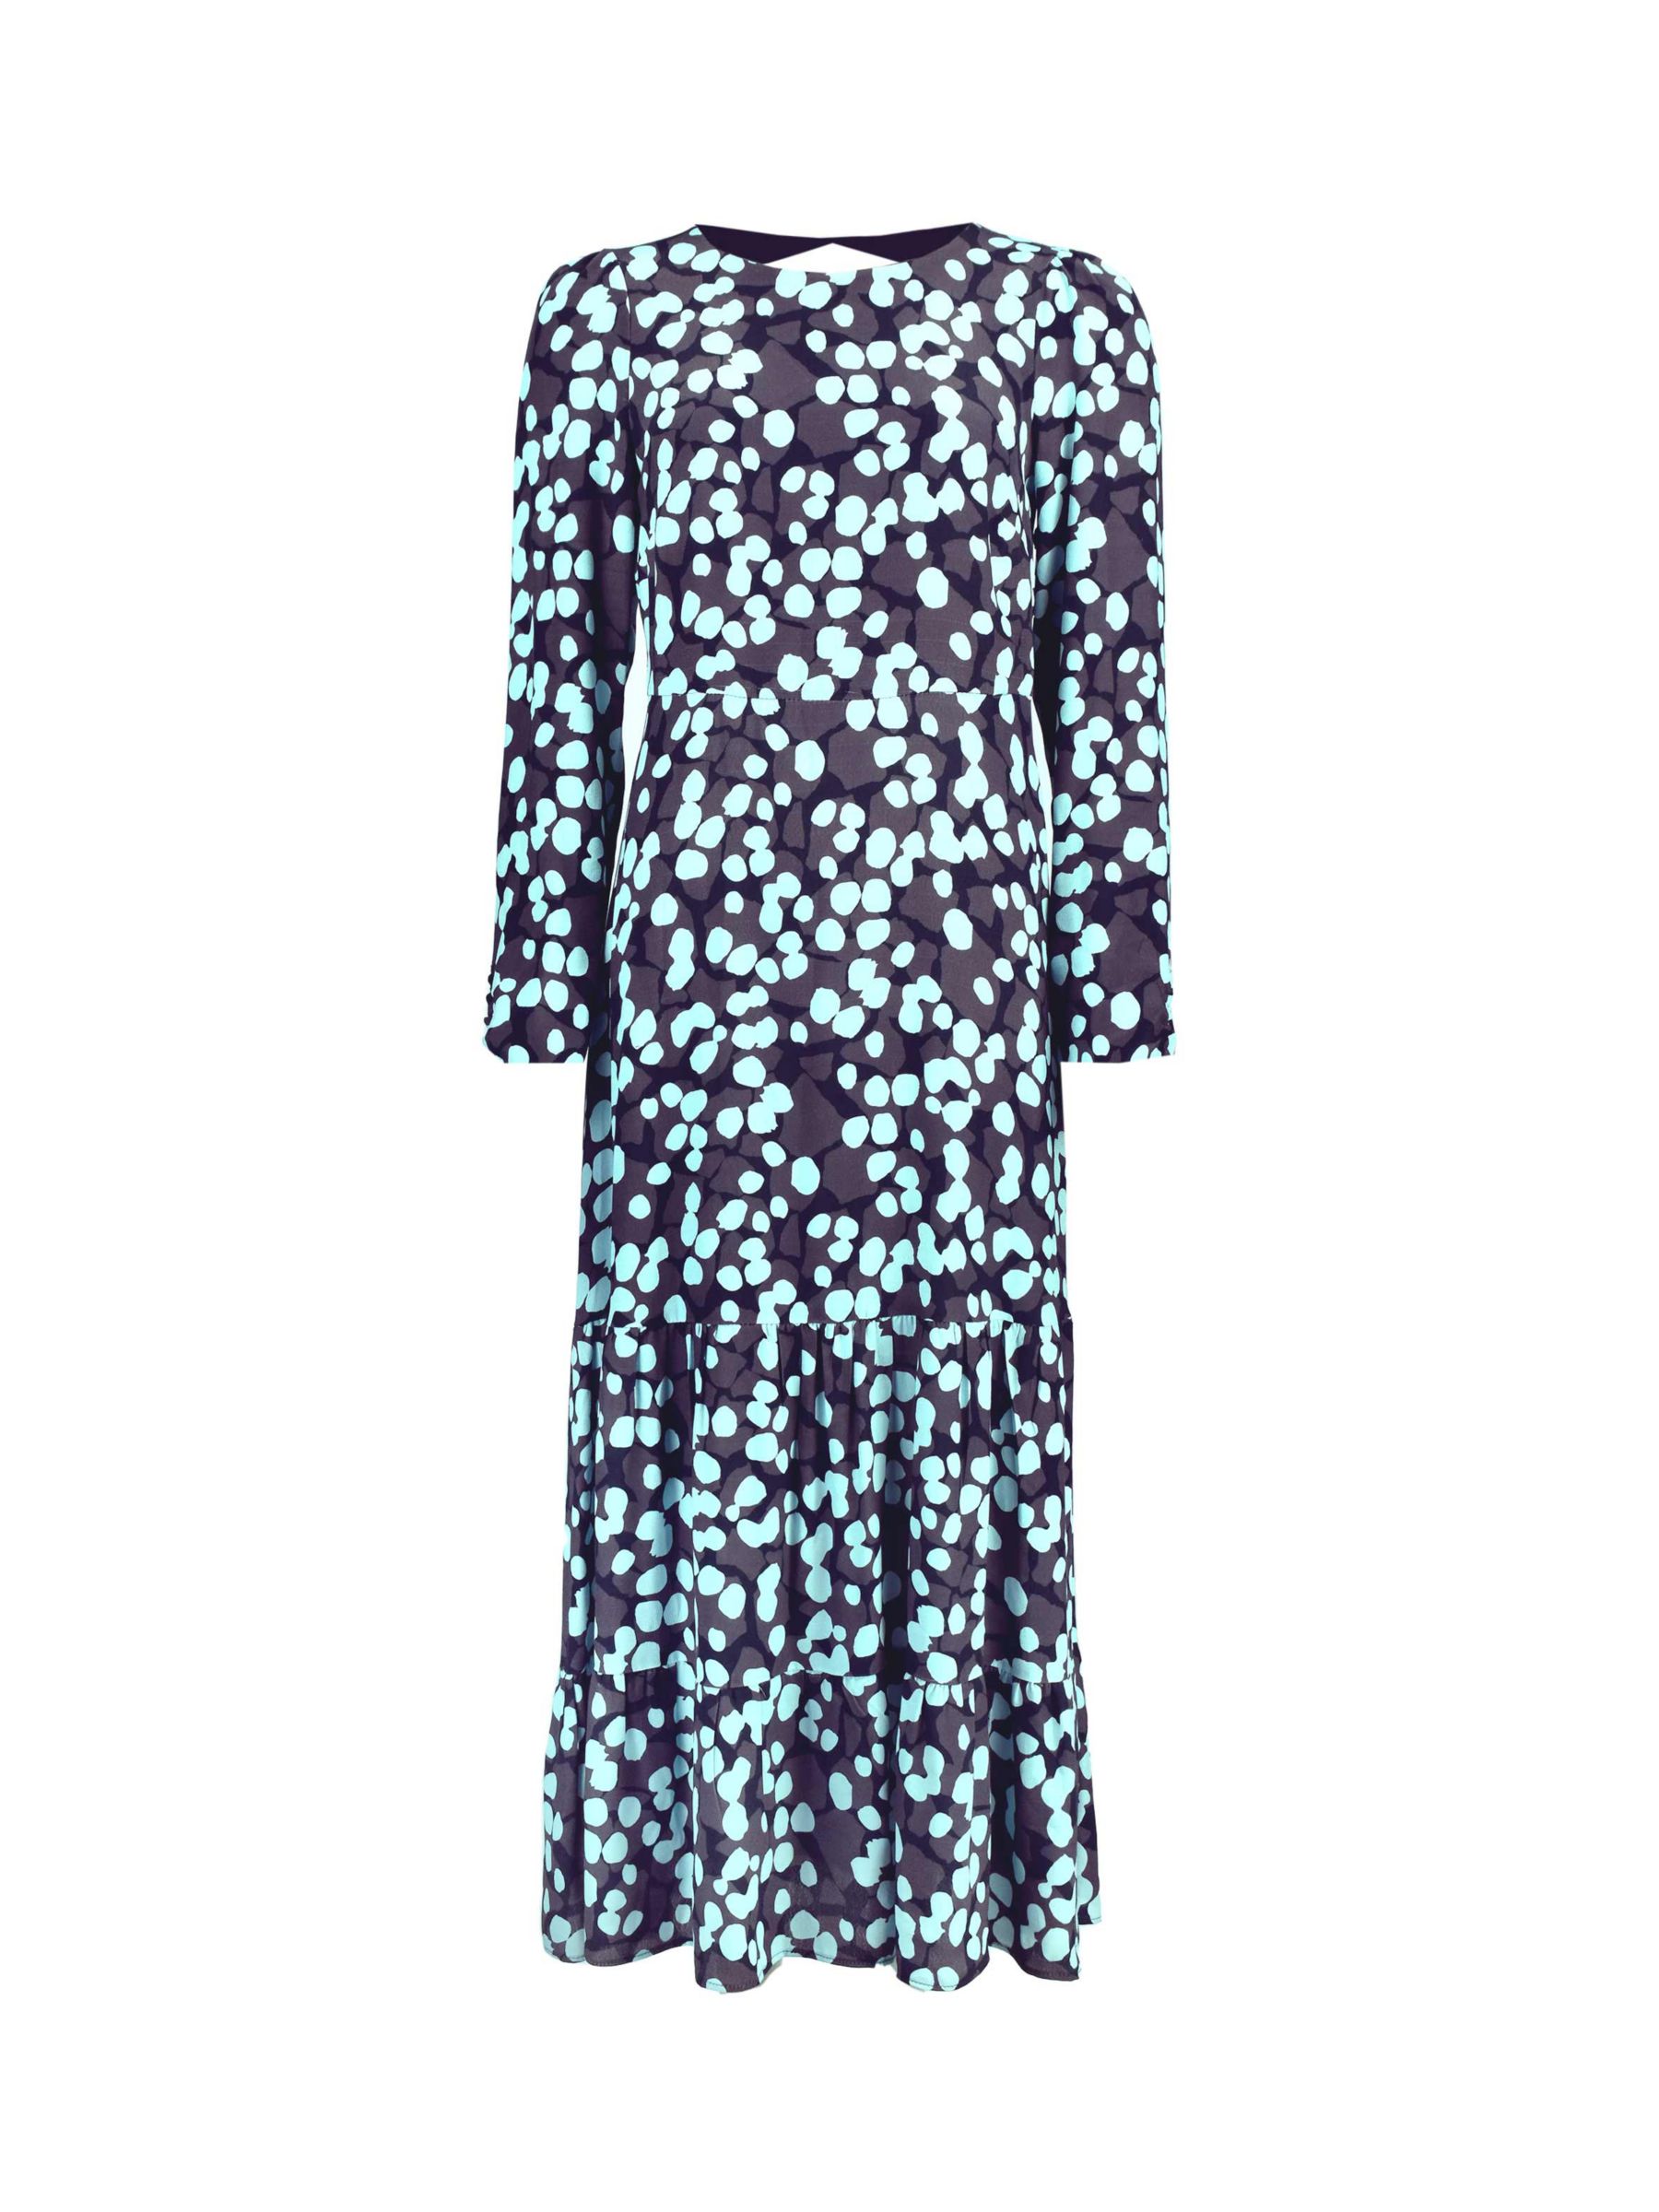 Ro&Zo Abstract Spot Print Midi Dress, Blue/Multi at John Lewis & Partners